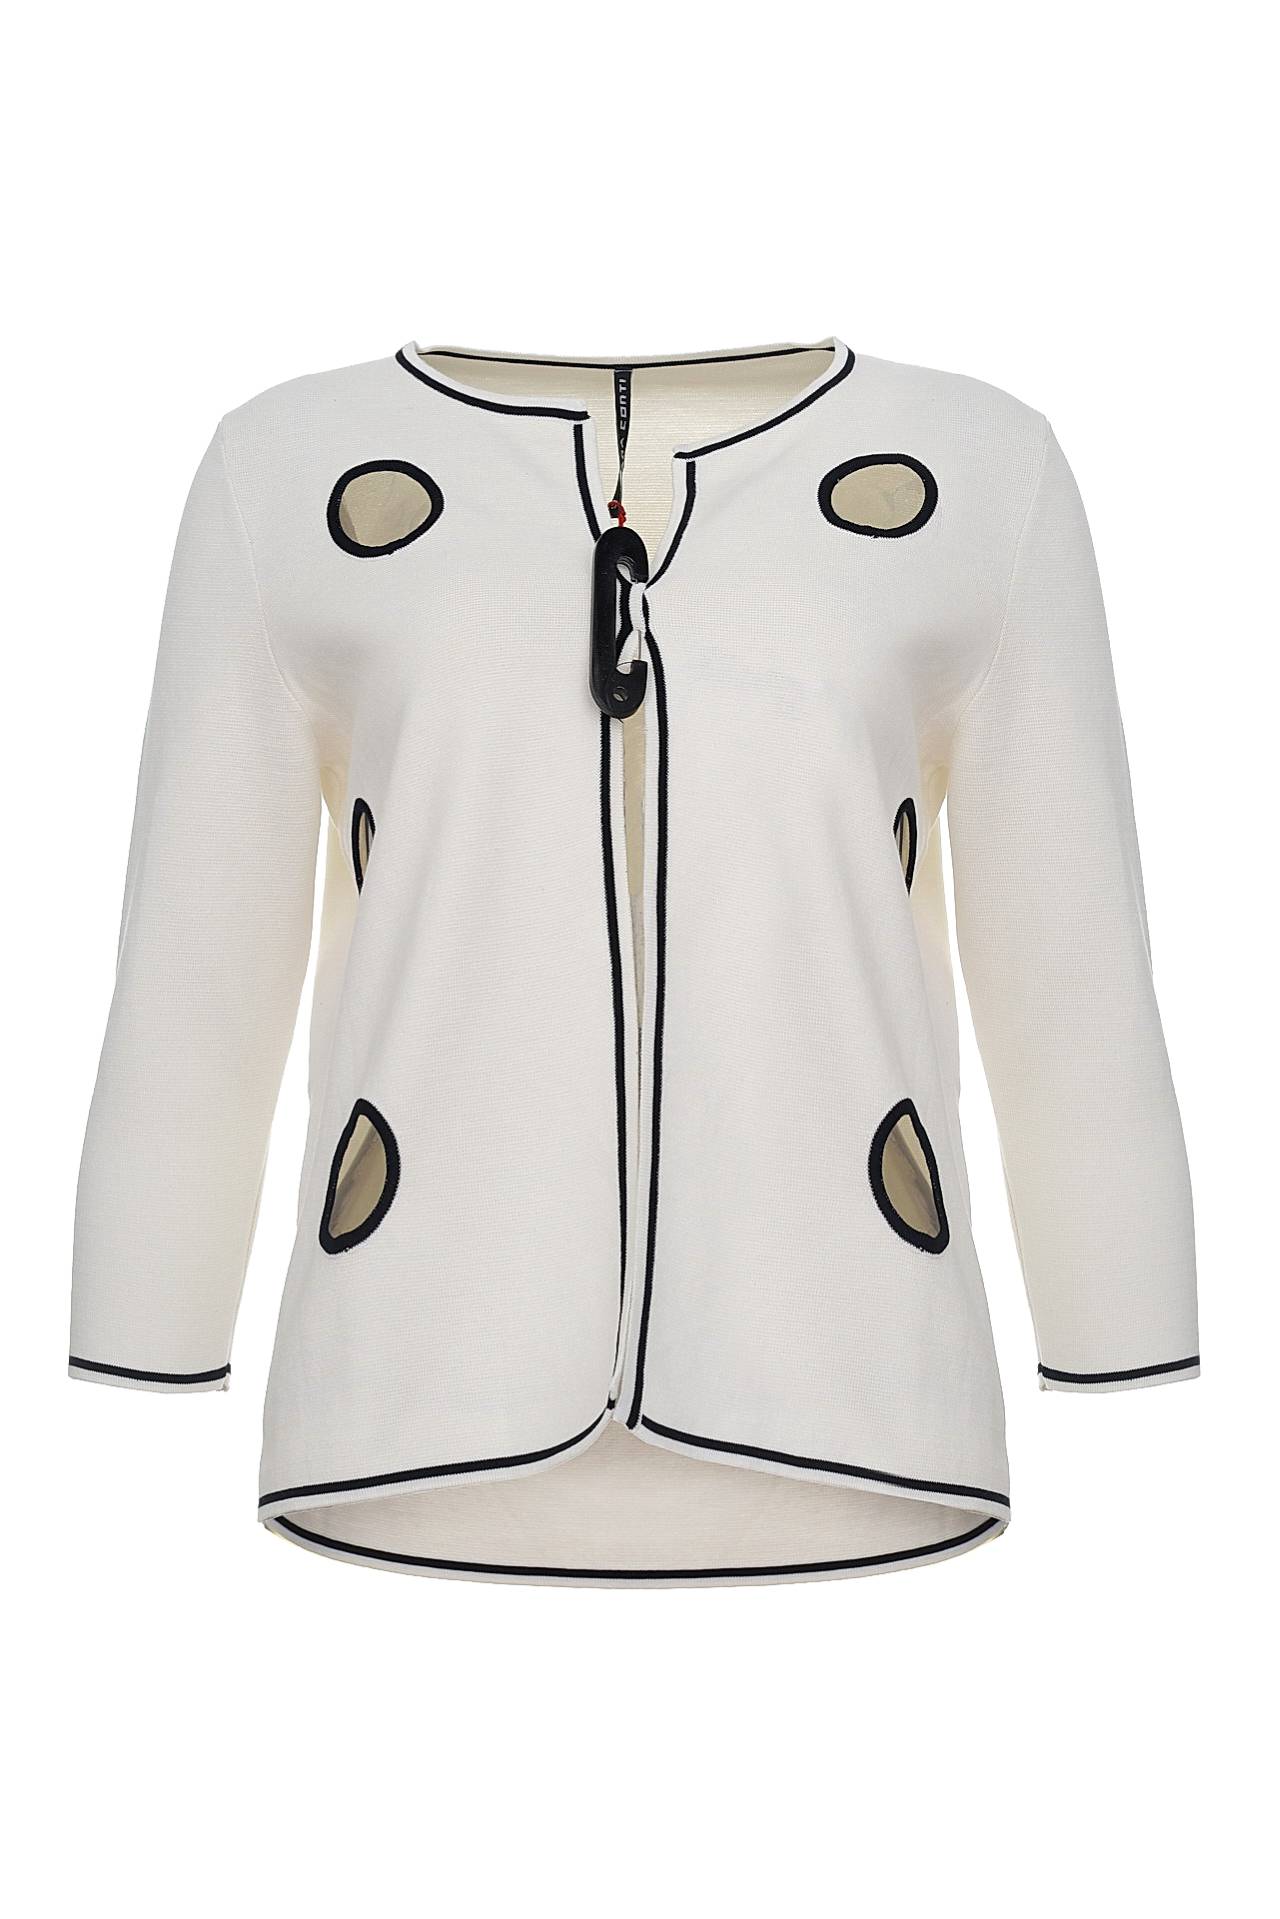 Одежда женская Кардиган LIVIANA CONTI (F5EB20/15.2). Купить за 12750 руб.